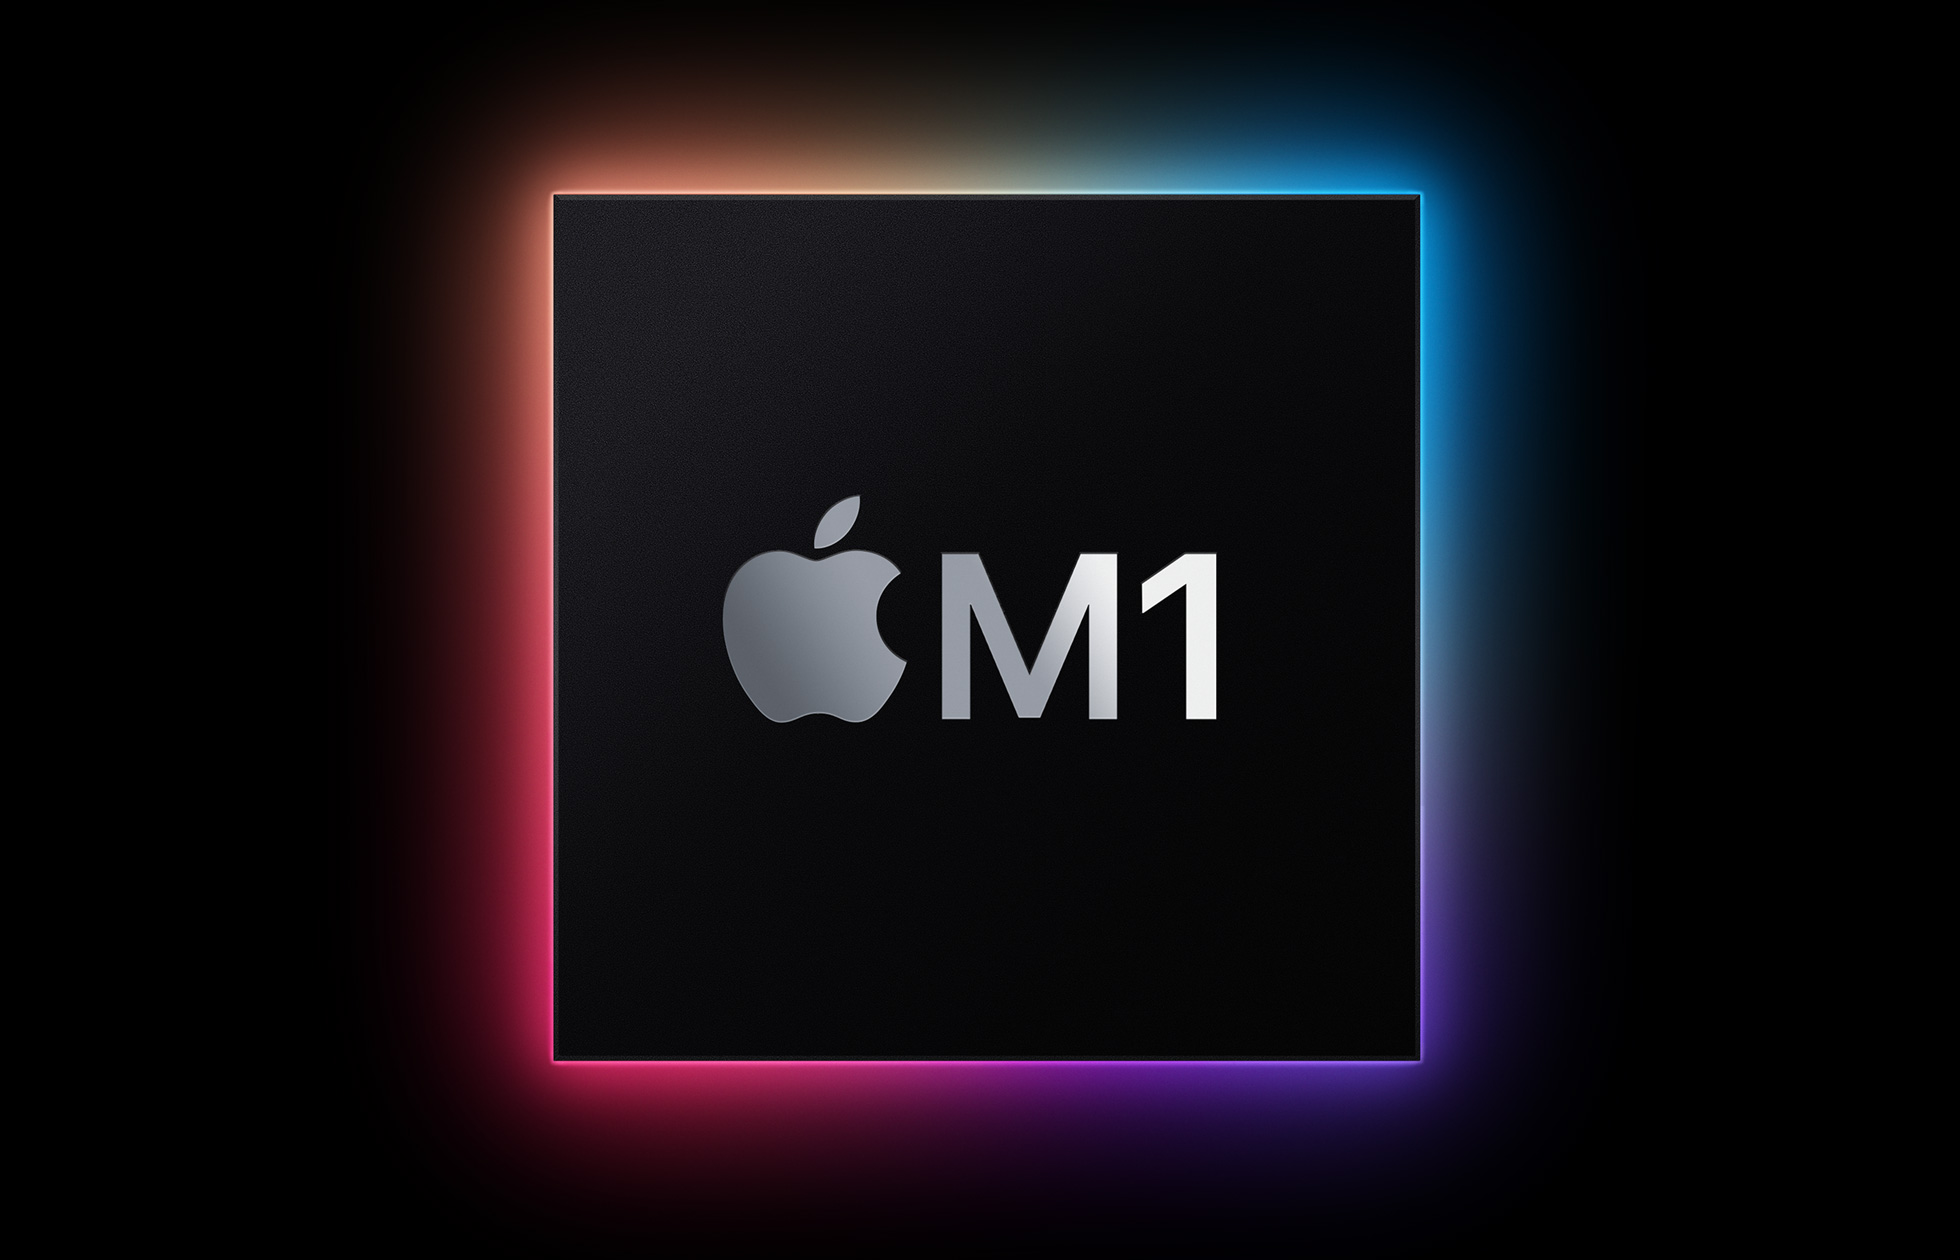 Apple_new-m1-chip-graphic_11102020_big.jpg.large_2x.jpg